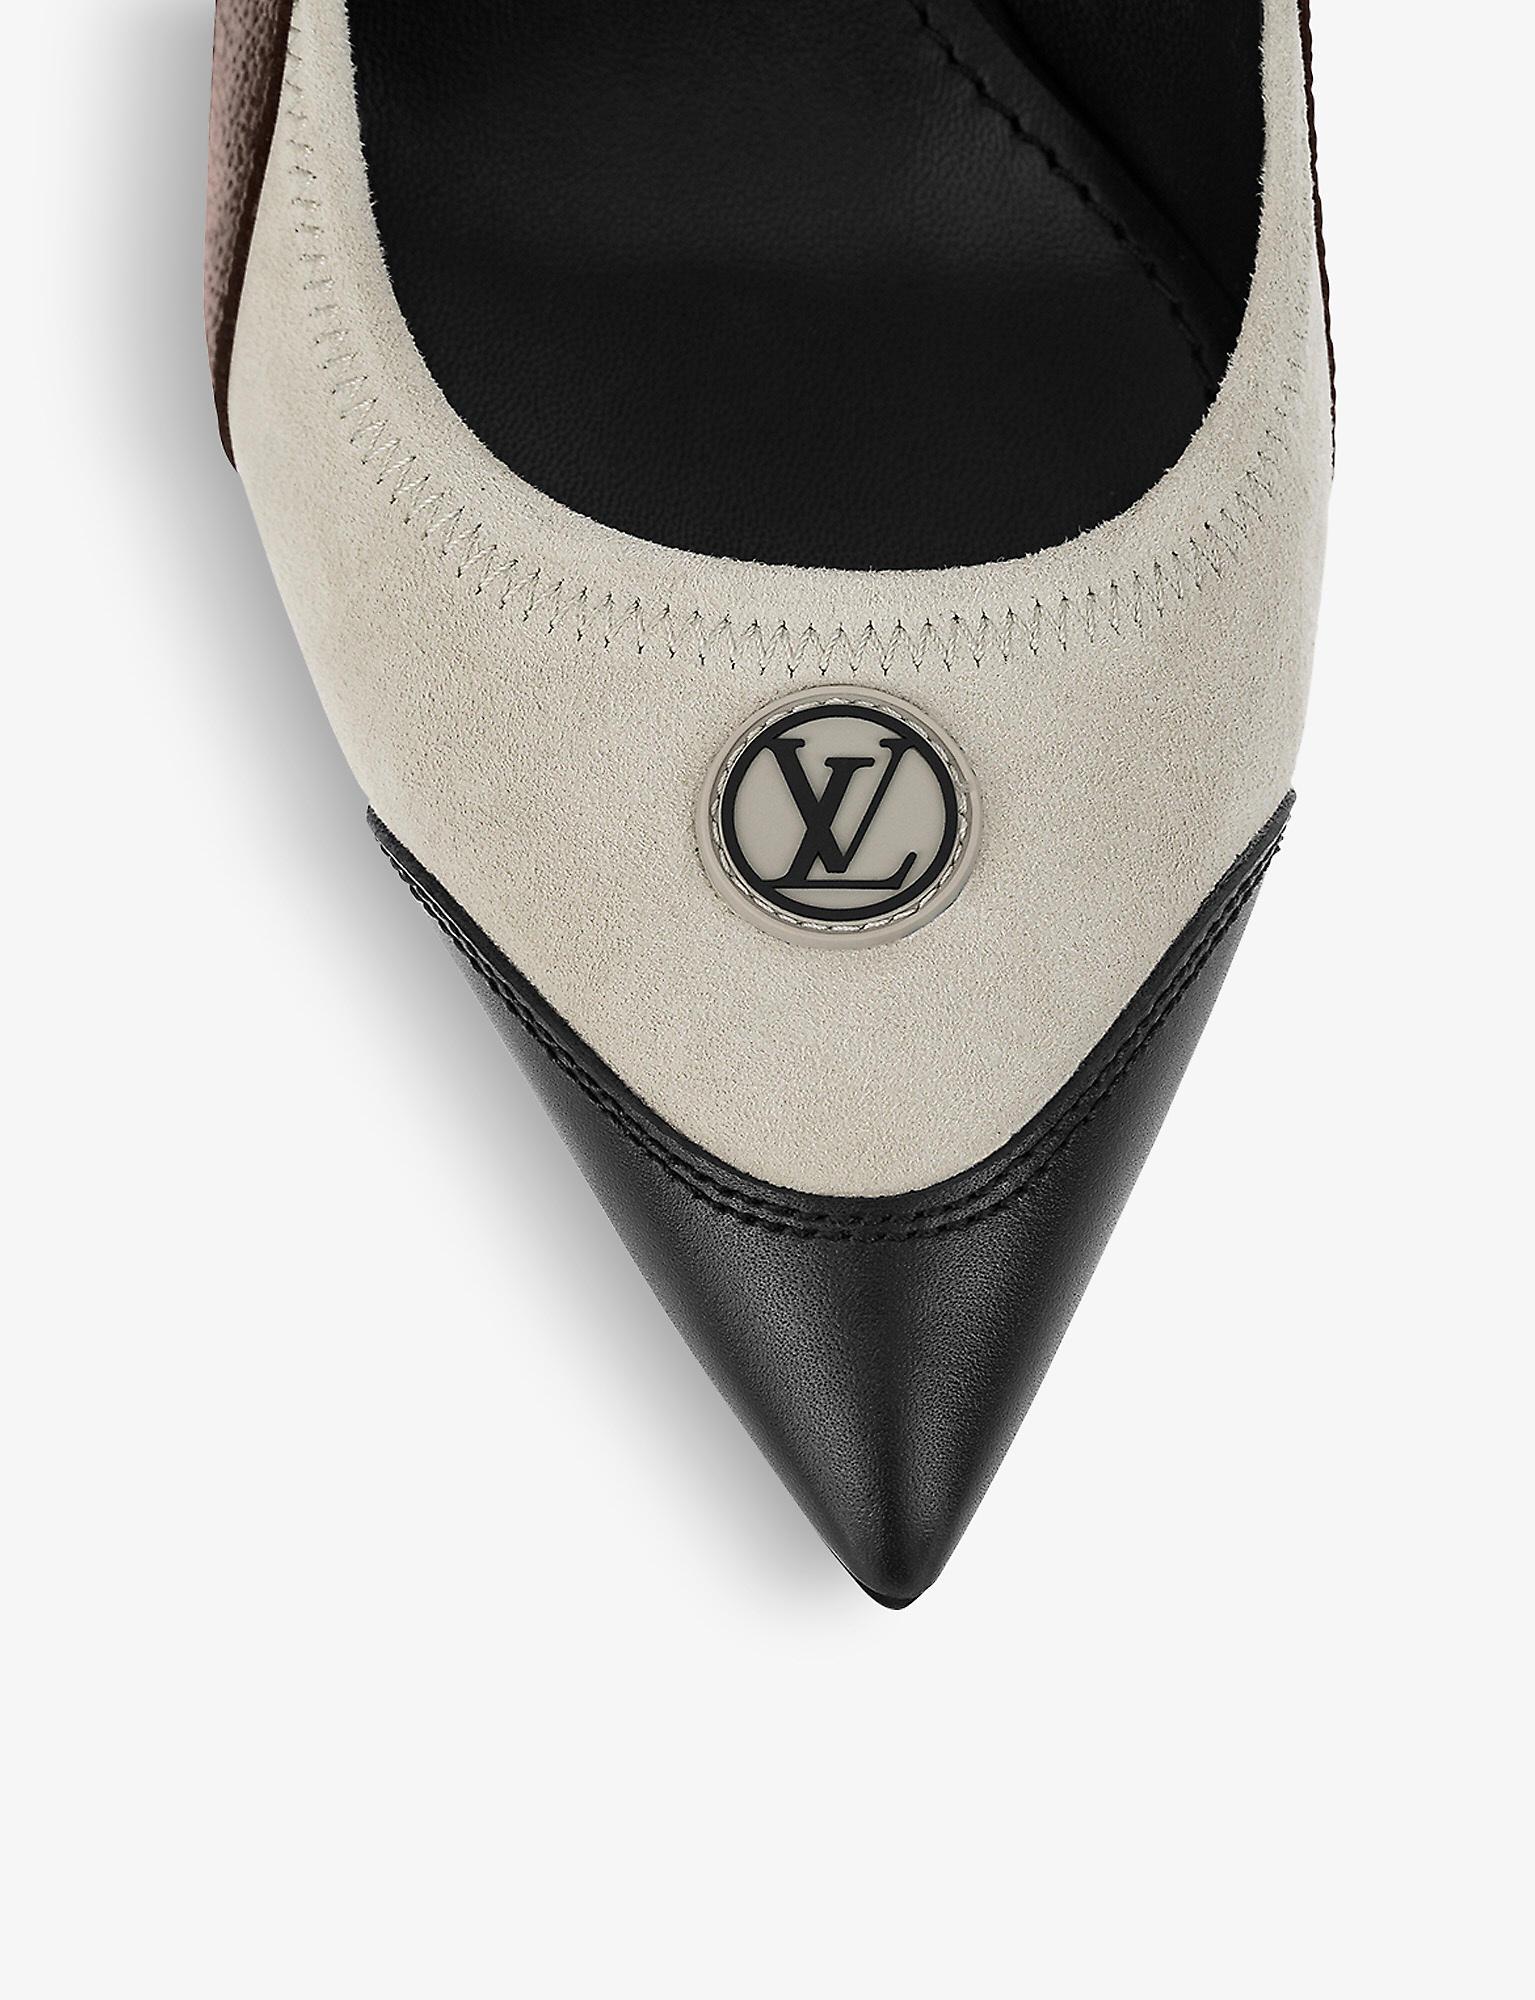 Louis Vuitton Archlight Monogram-printed Leather Slingback Pumps